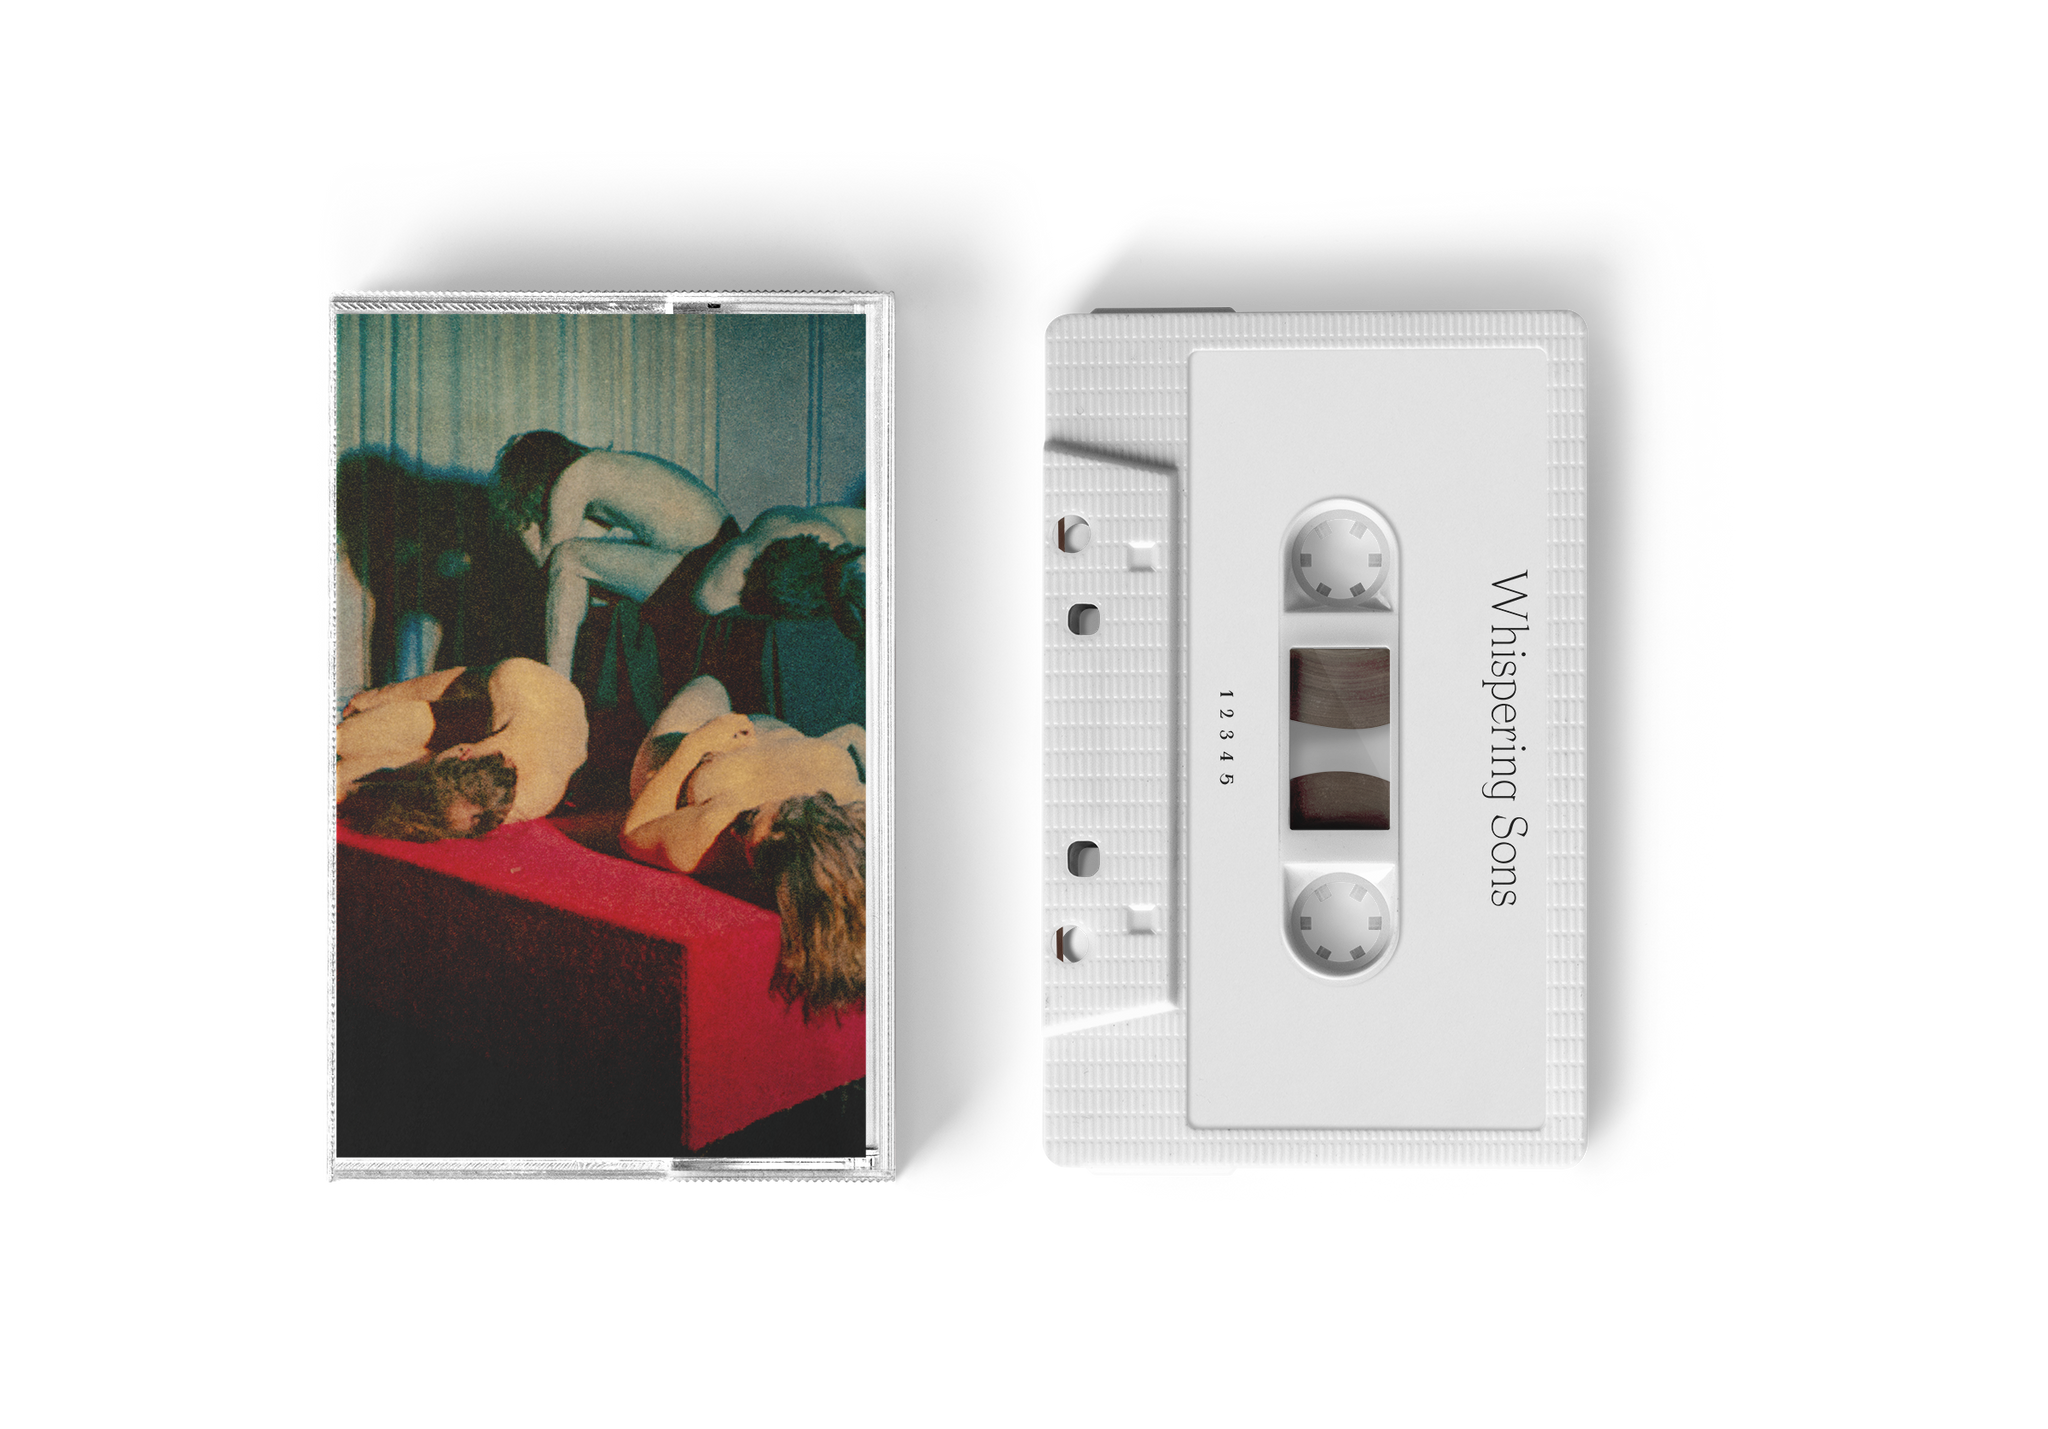 'Image' cassette